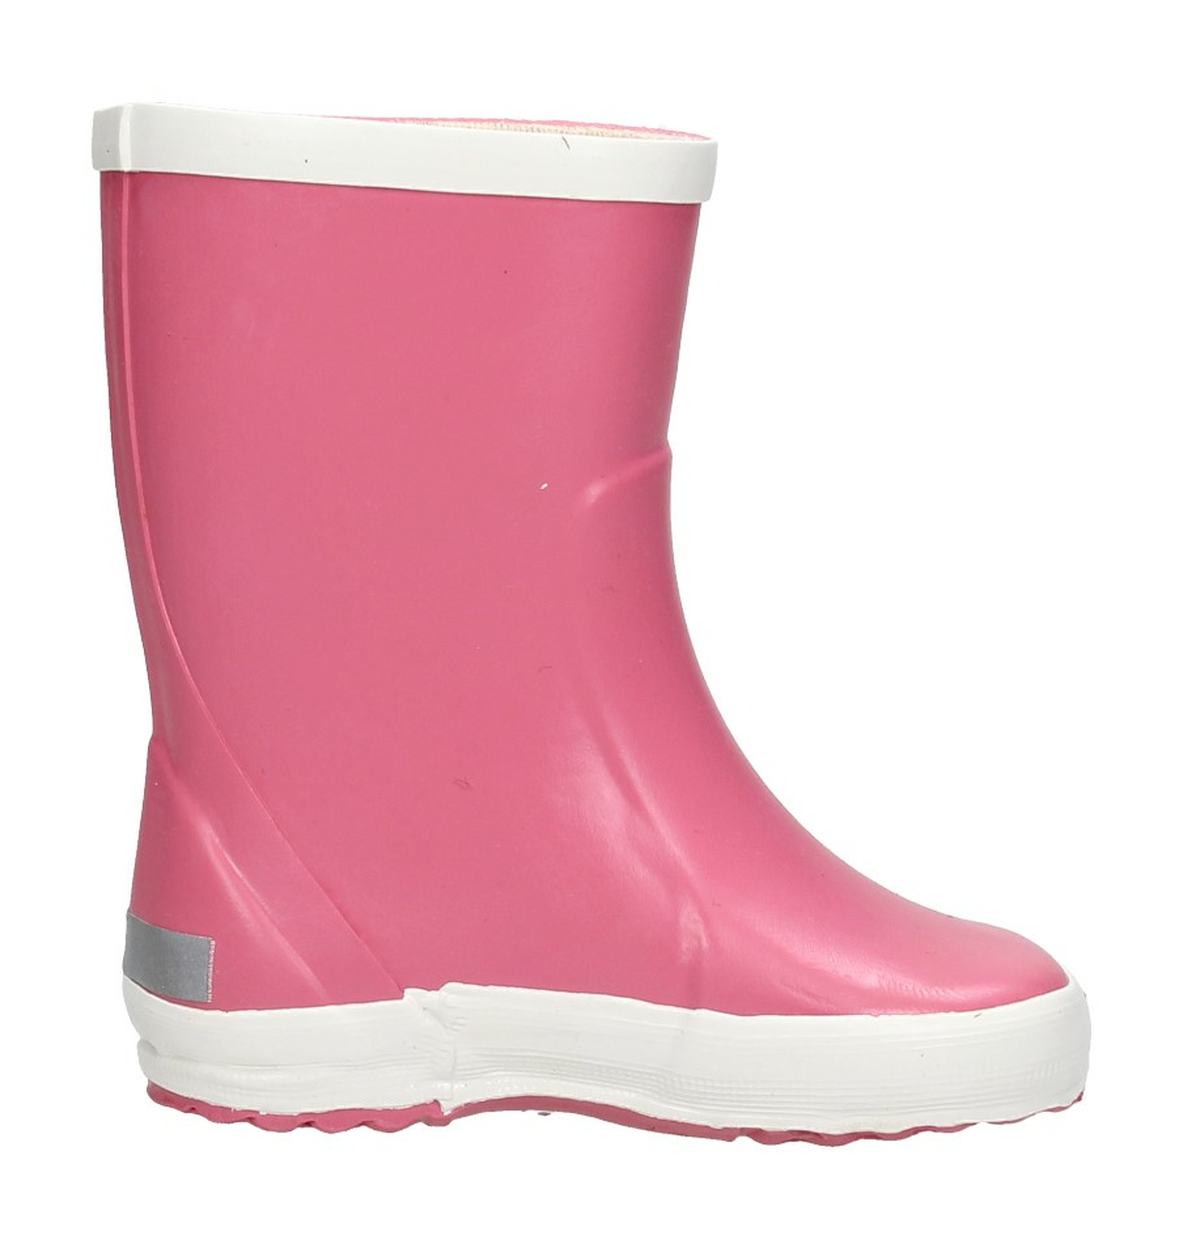 Bn Rainboot Pink